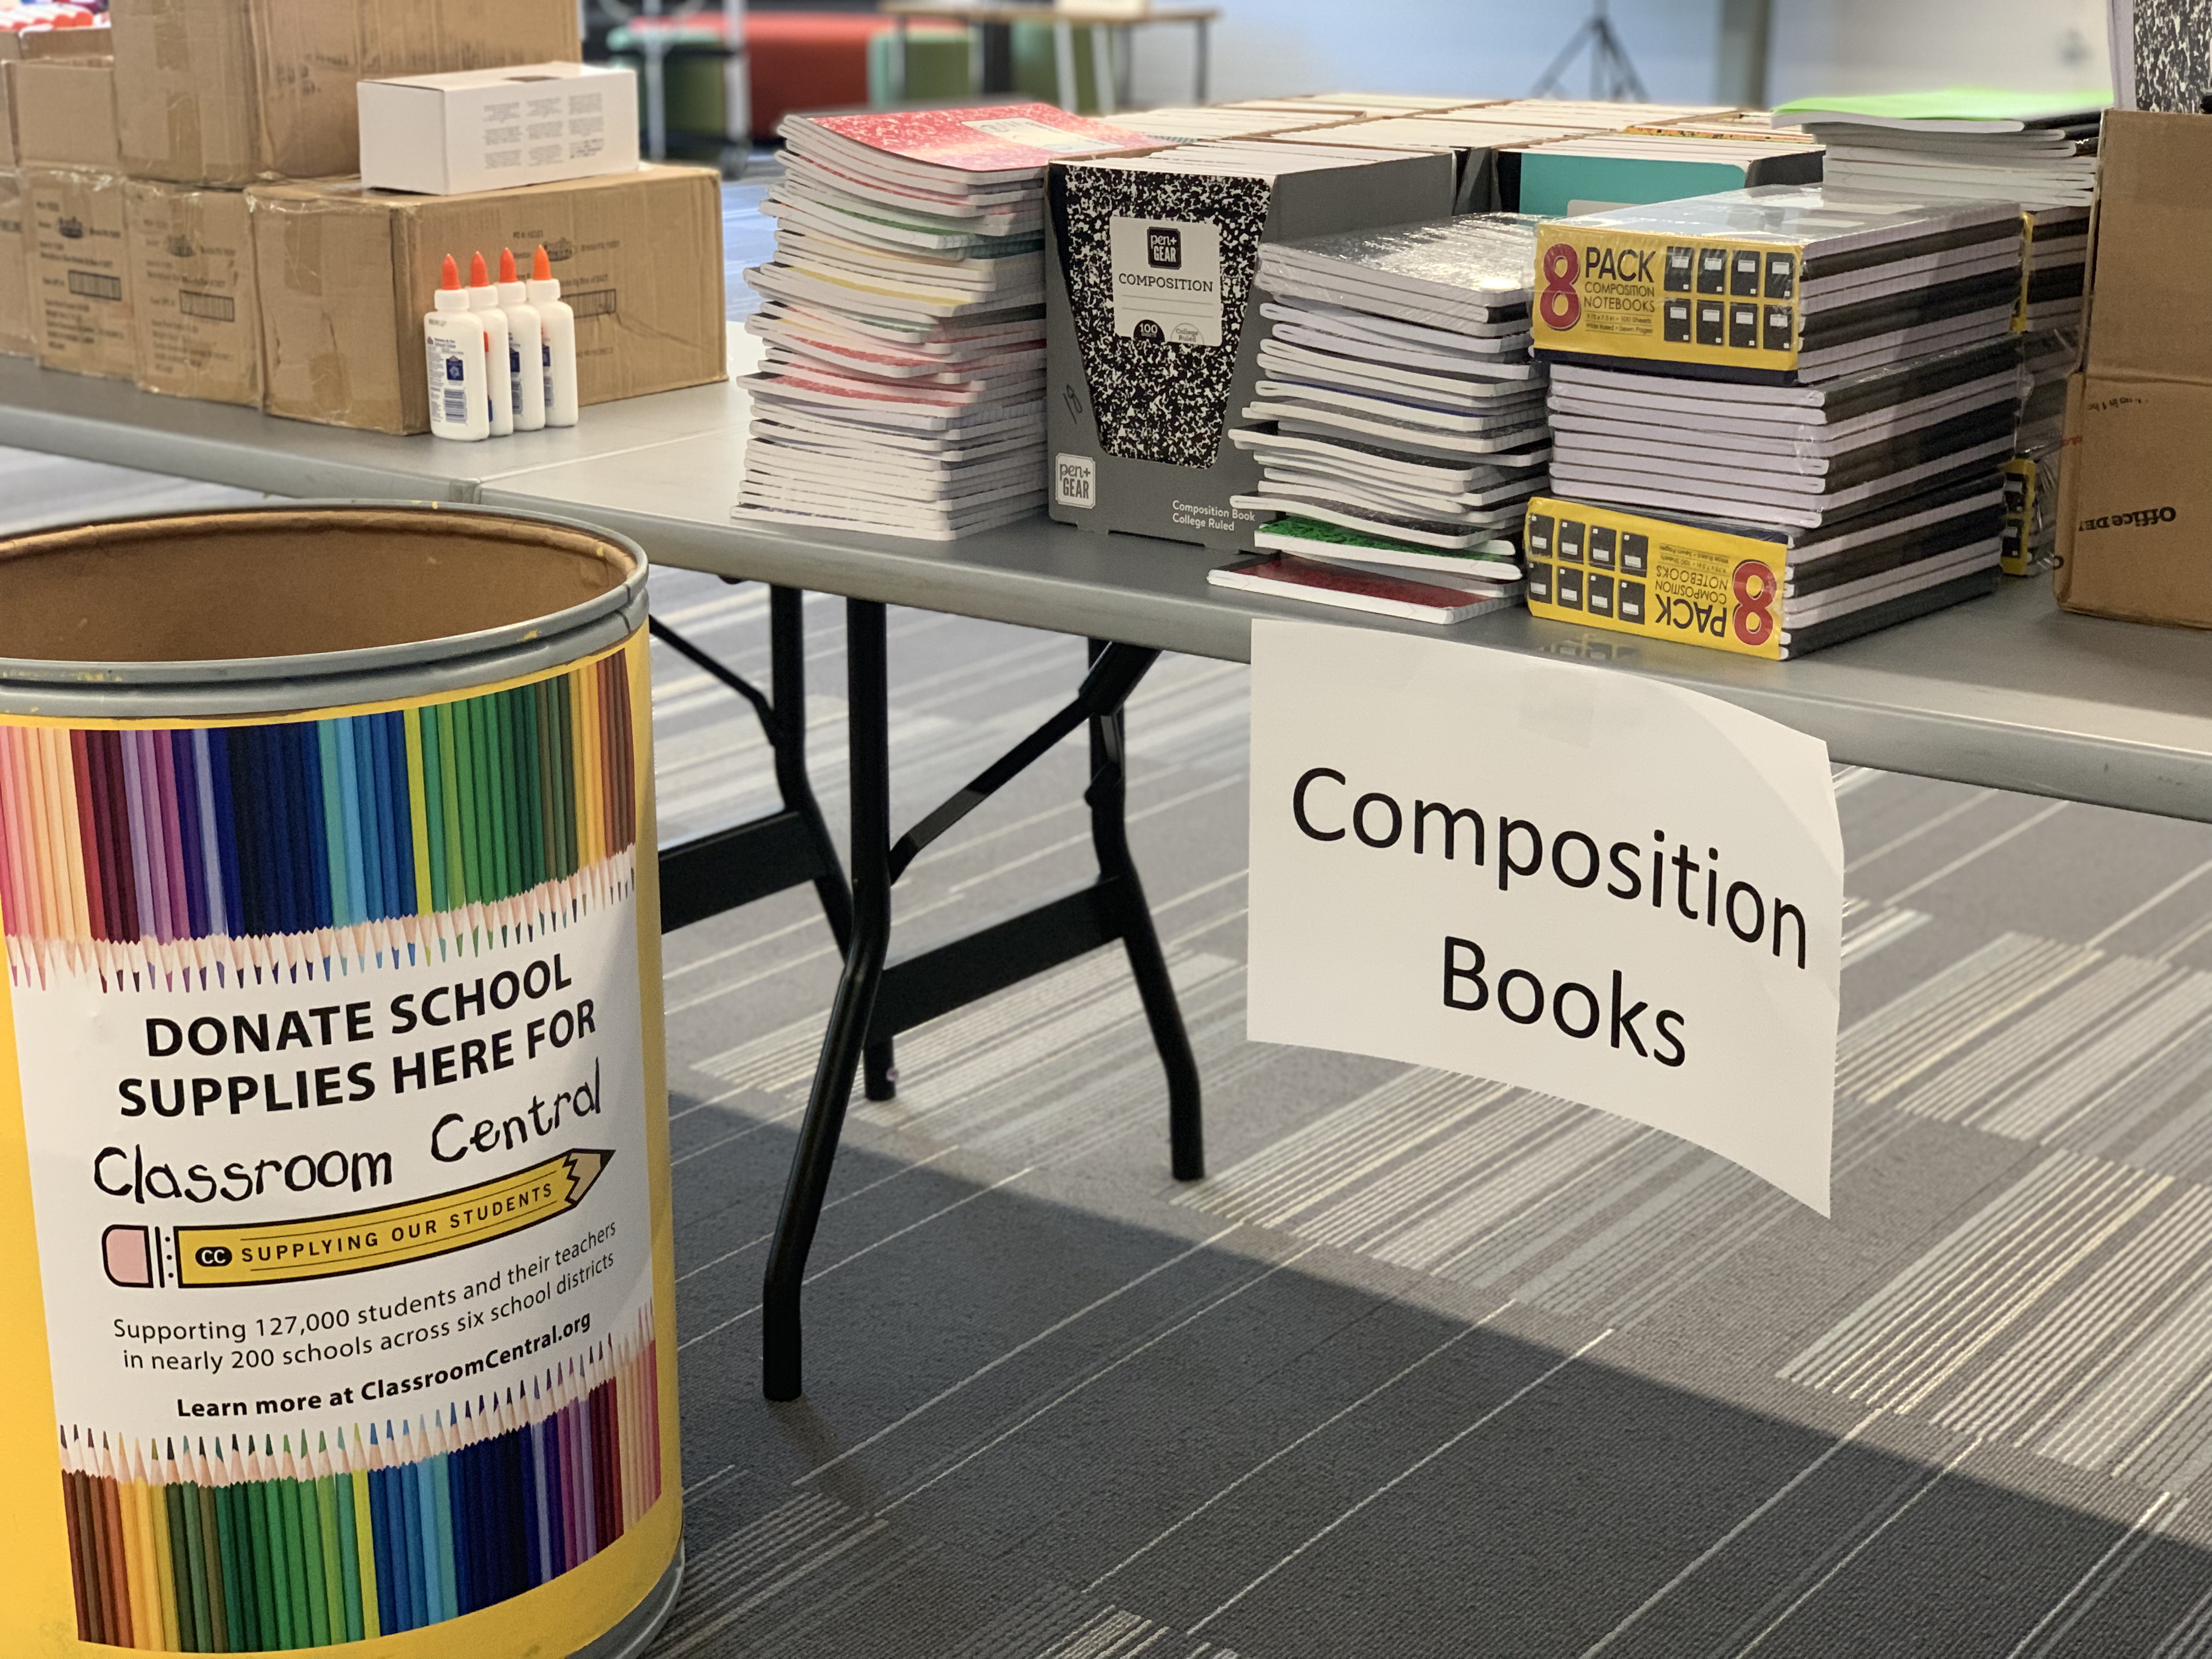 2019 LOSO donated 561 Composition Books